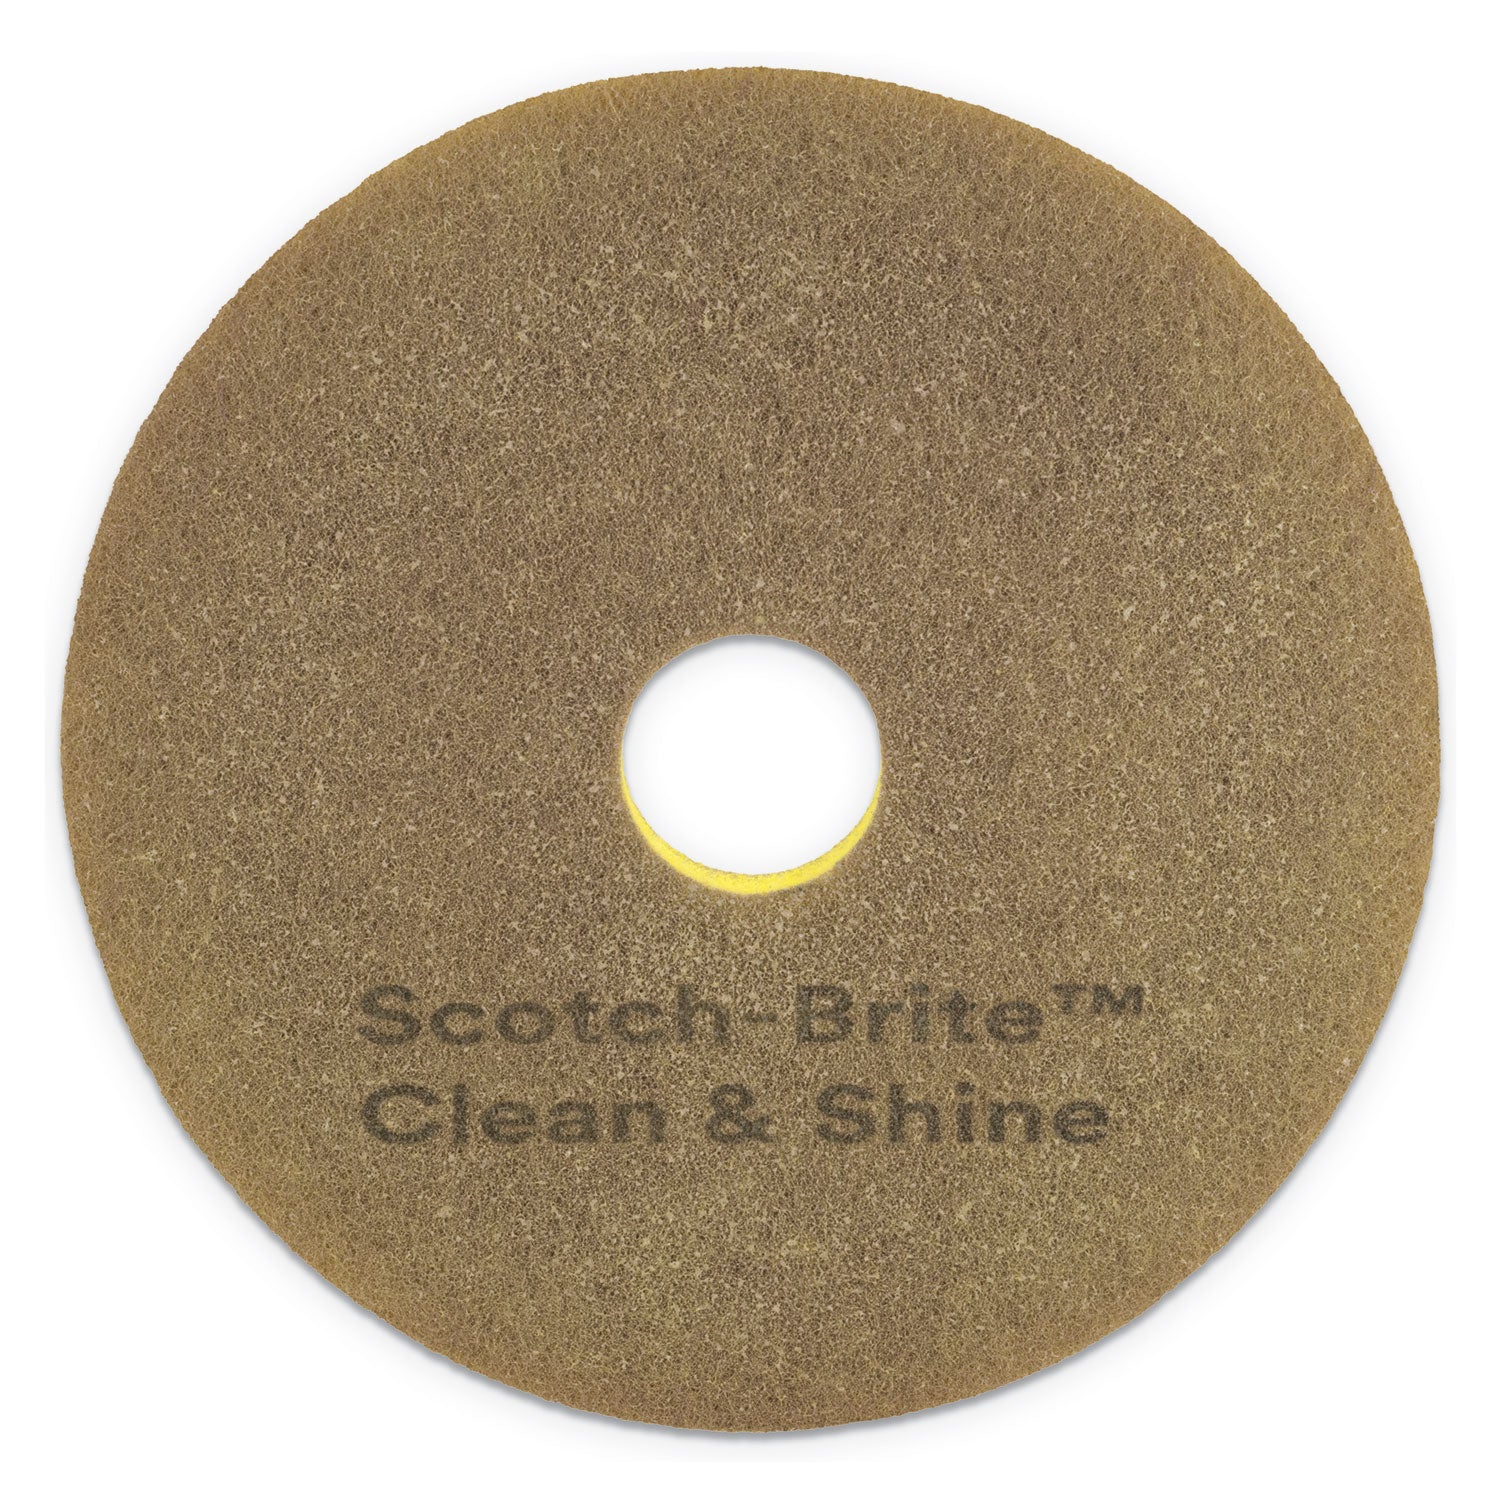 clean-and-shine-pad-20-diameter-brown-yellow-5-carton_mmm09541 - 1